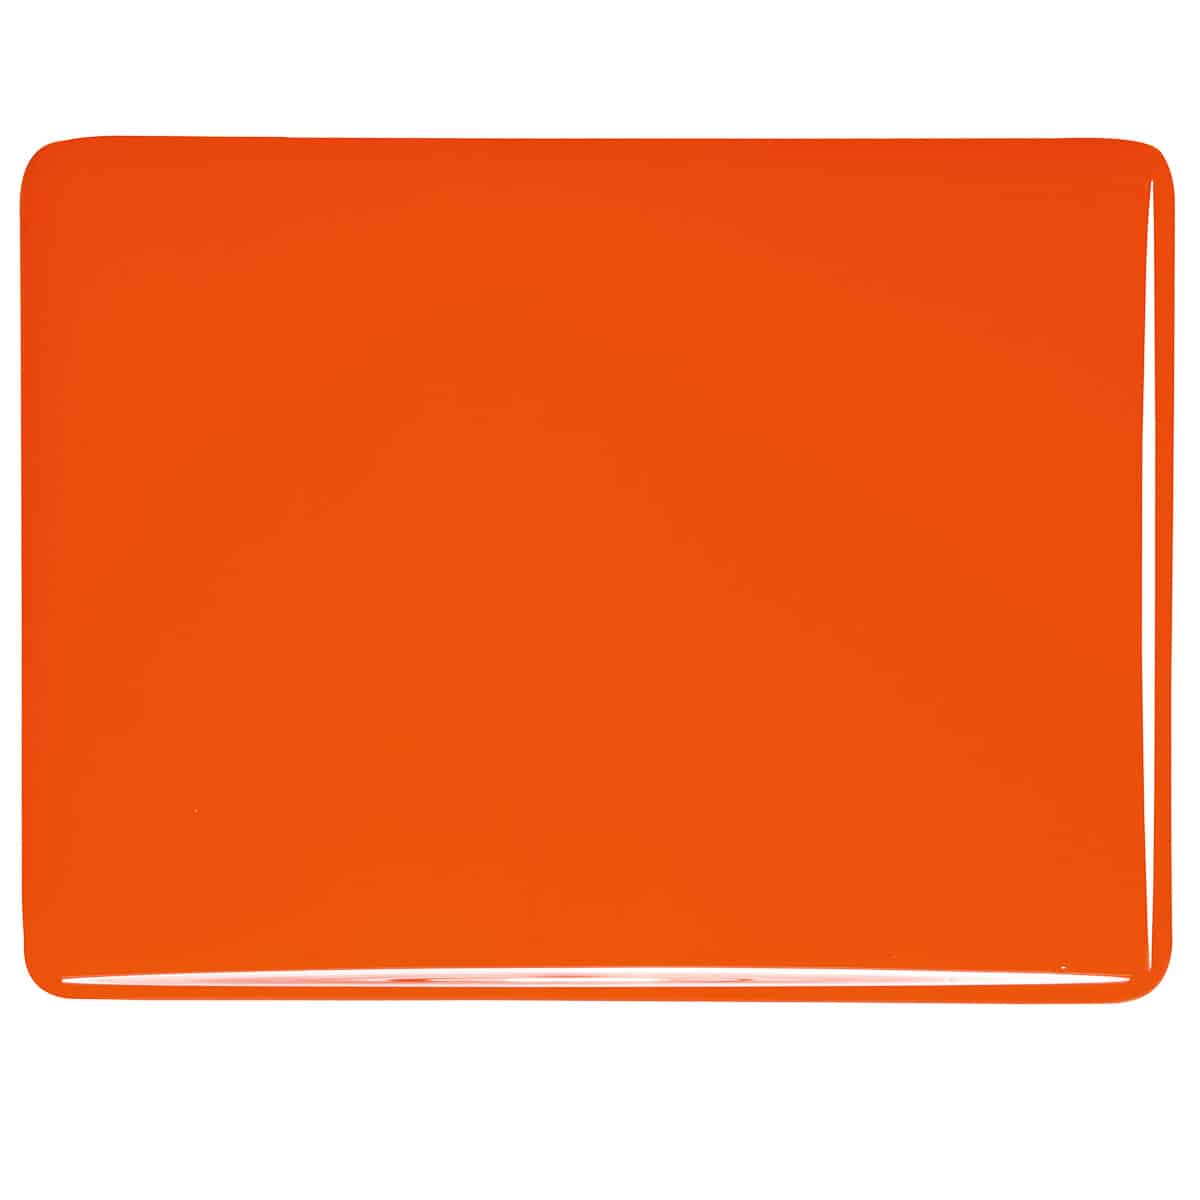 000125 Orange Opalescent